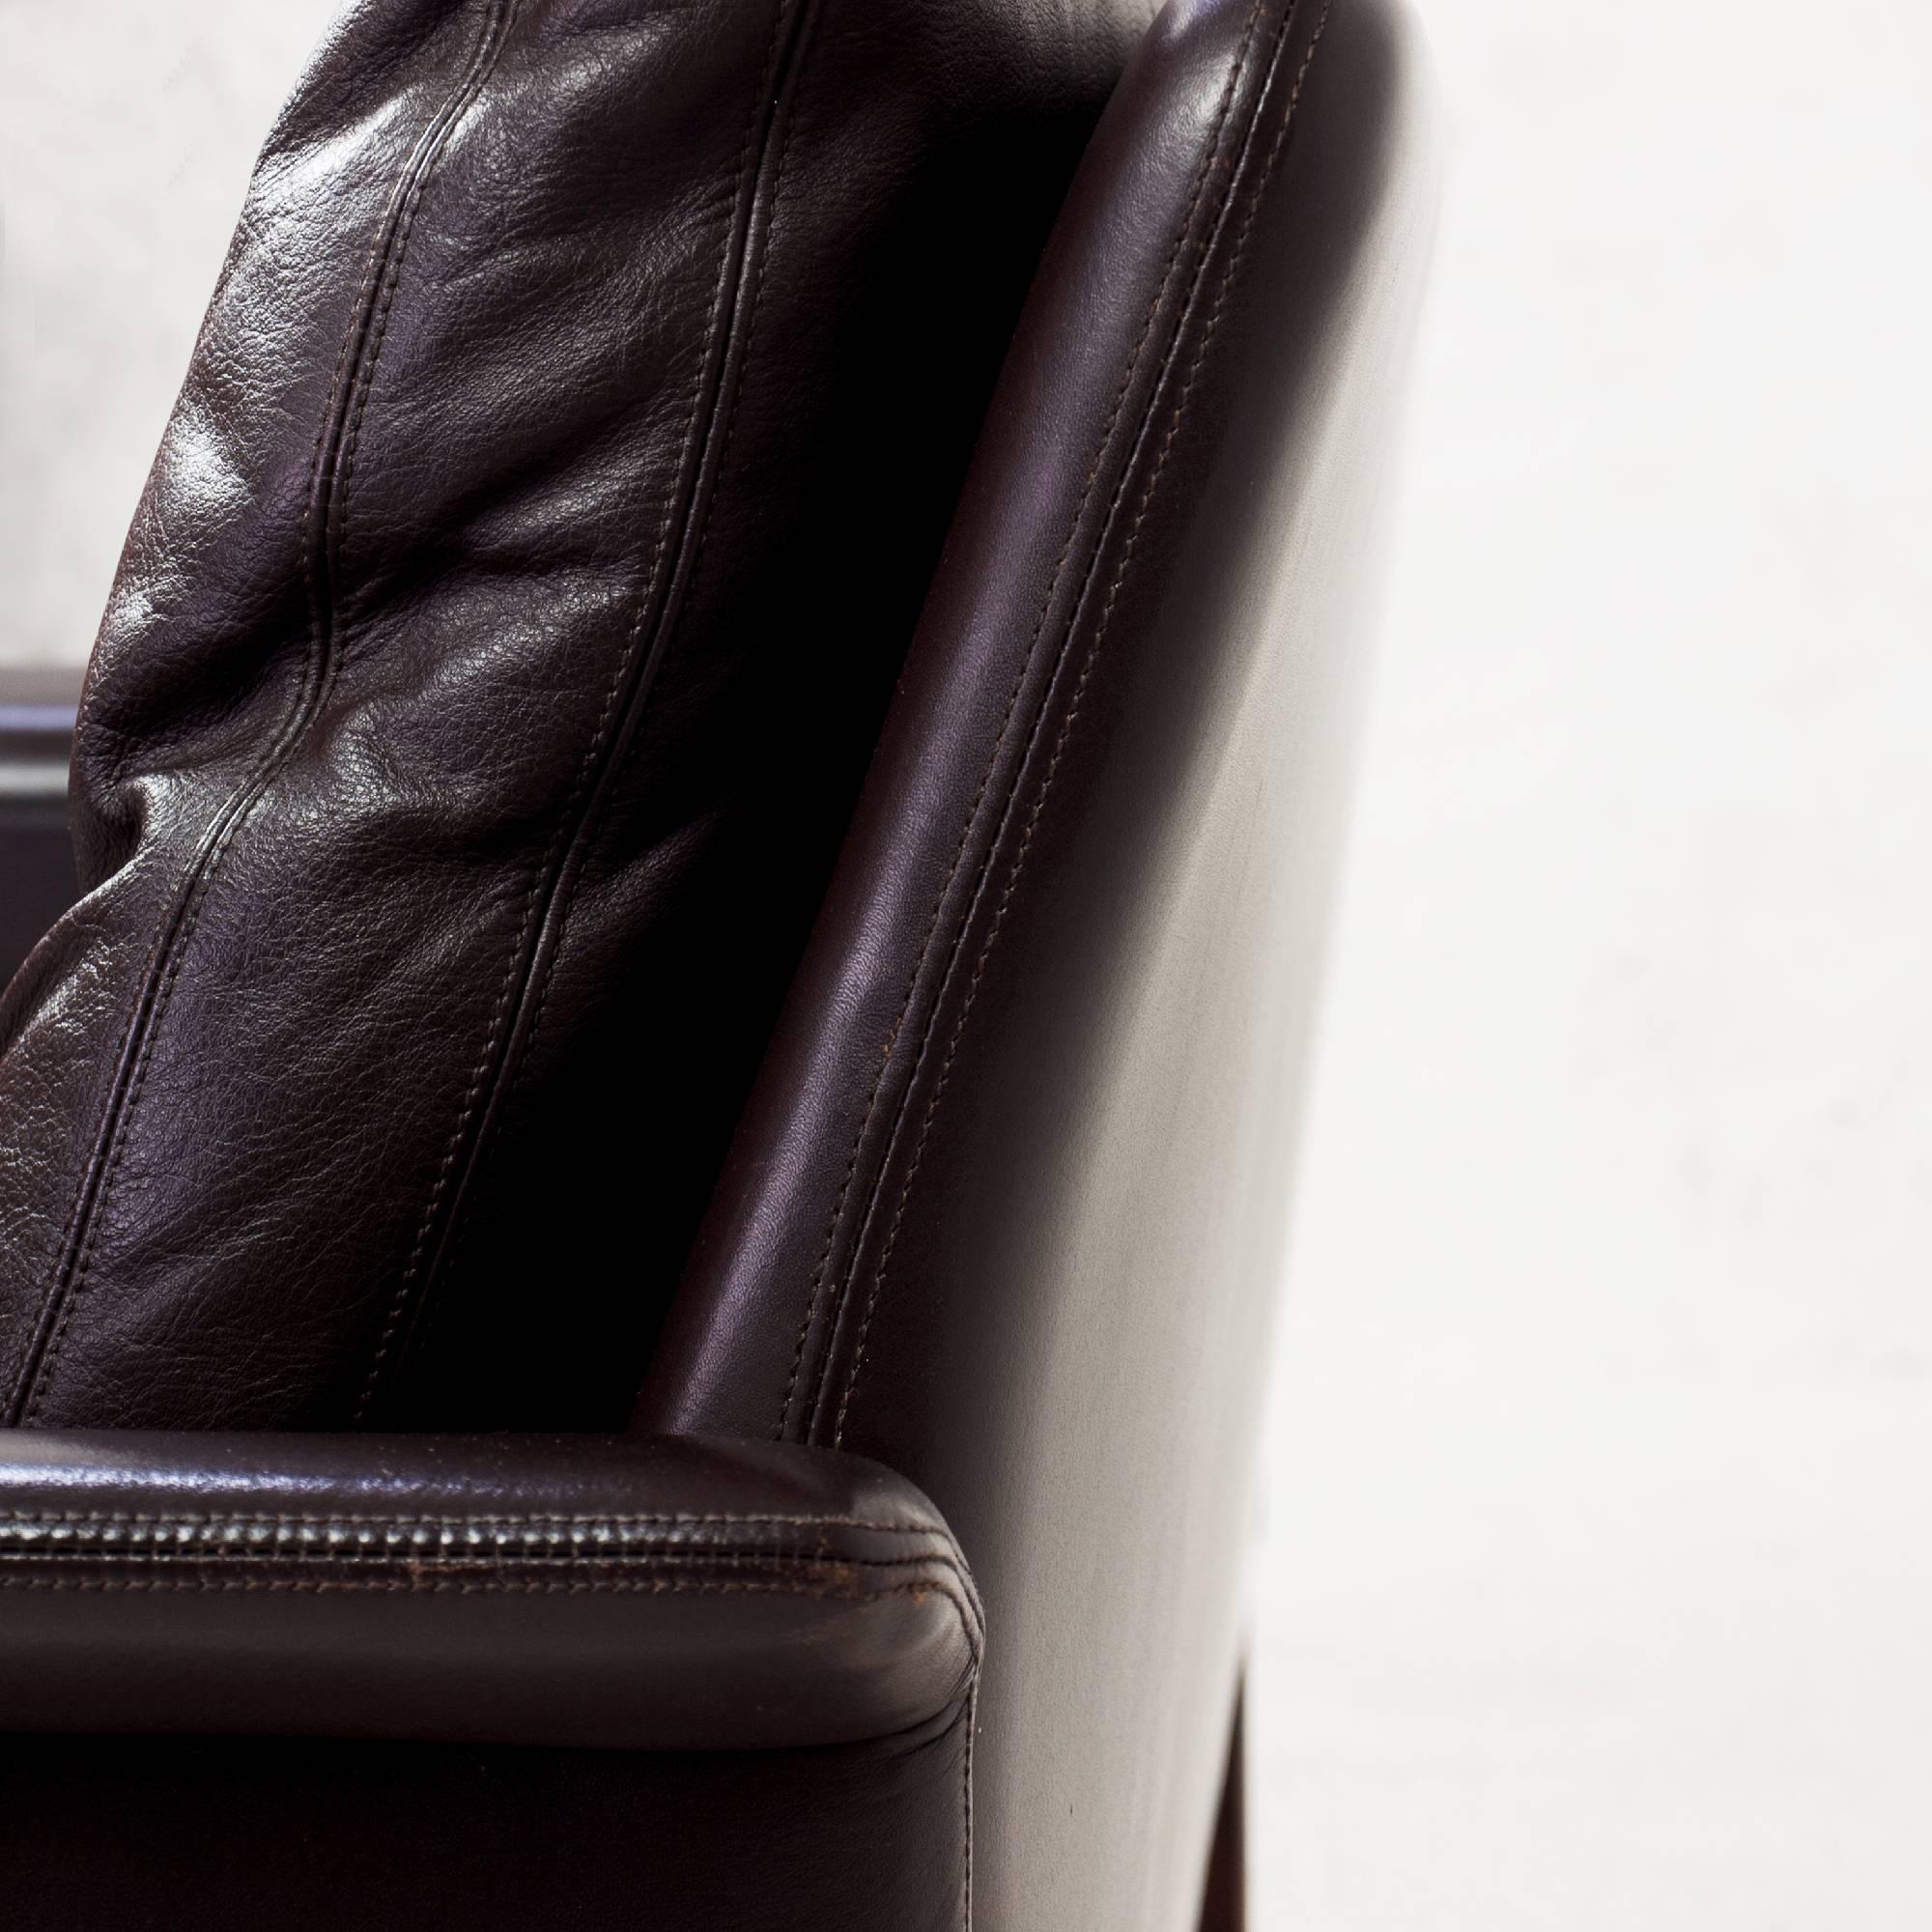 Hans Olsen Two-Seat Leather Sofa Model 500 for C/S Møbler 1